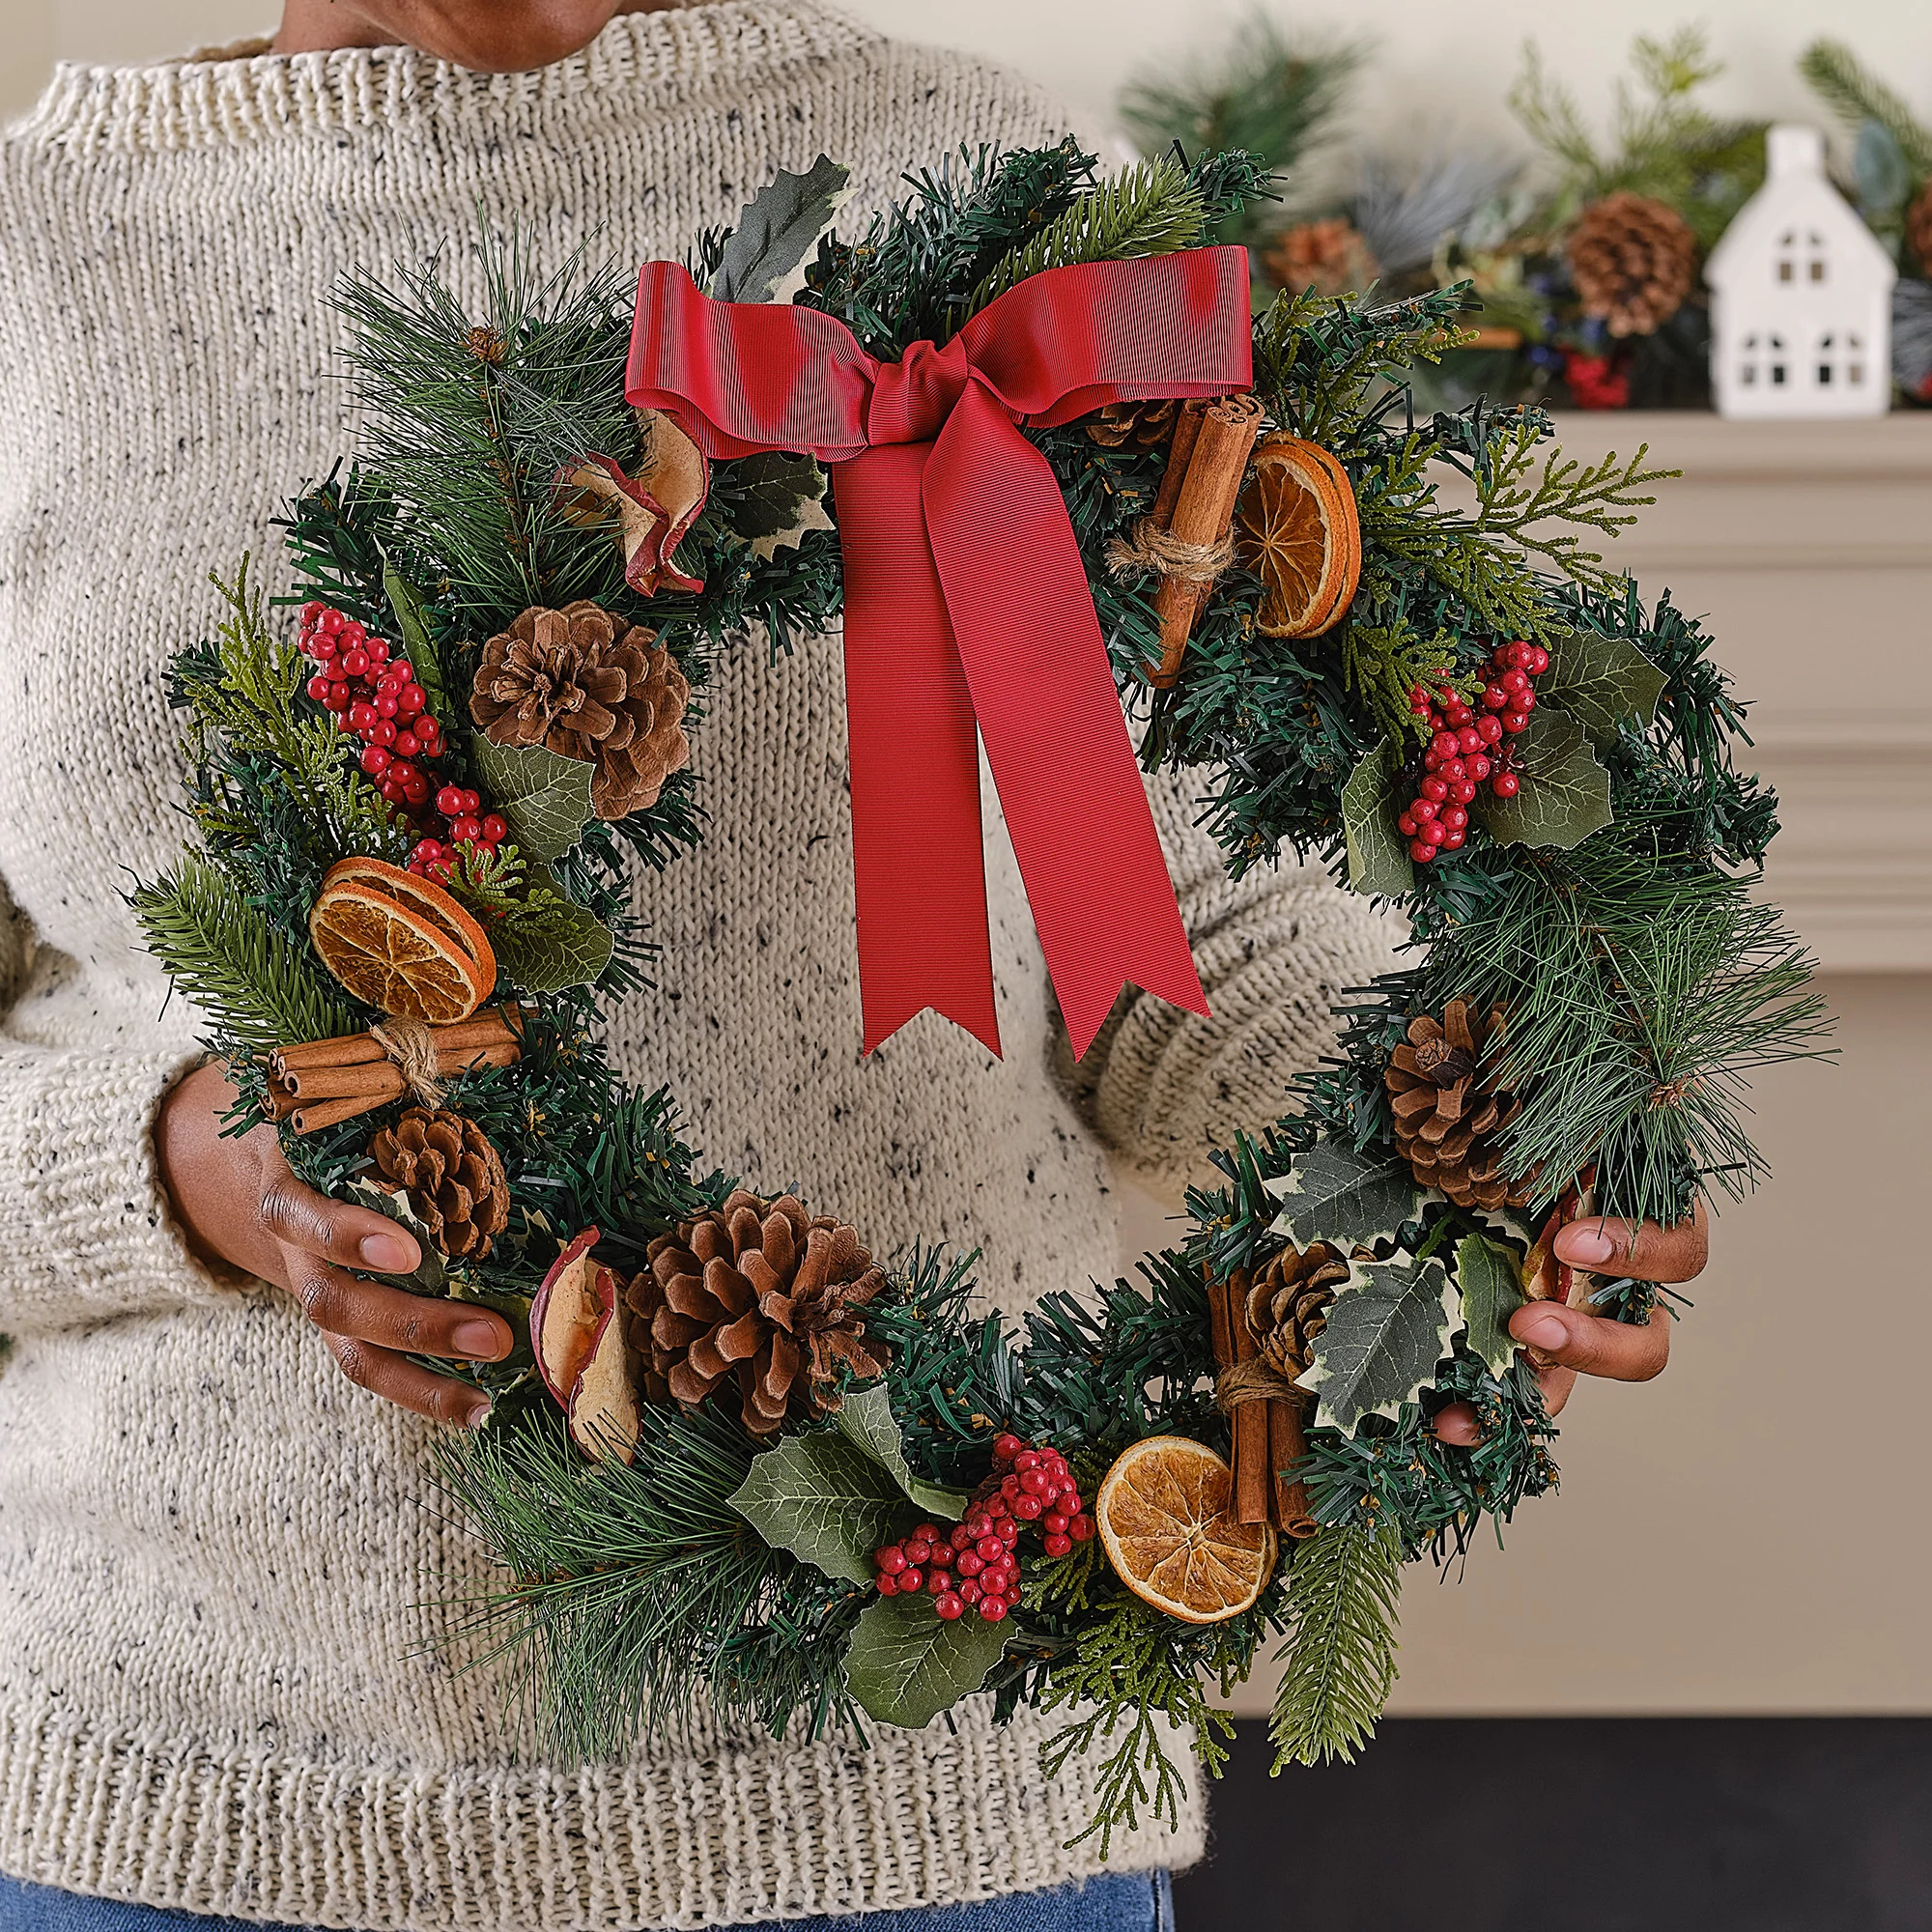 DIY Christmas Wreath – Step by Step Tutorial